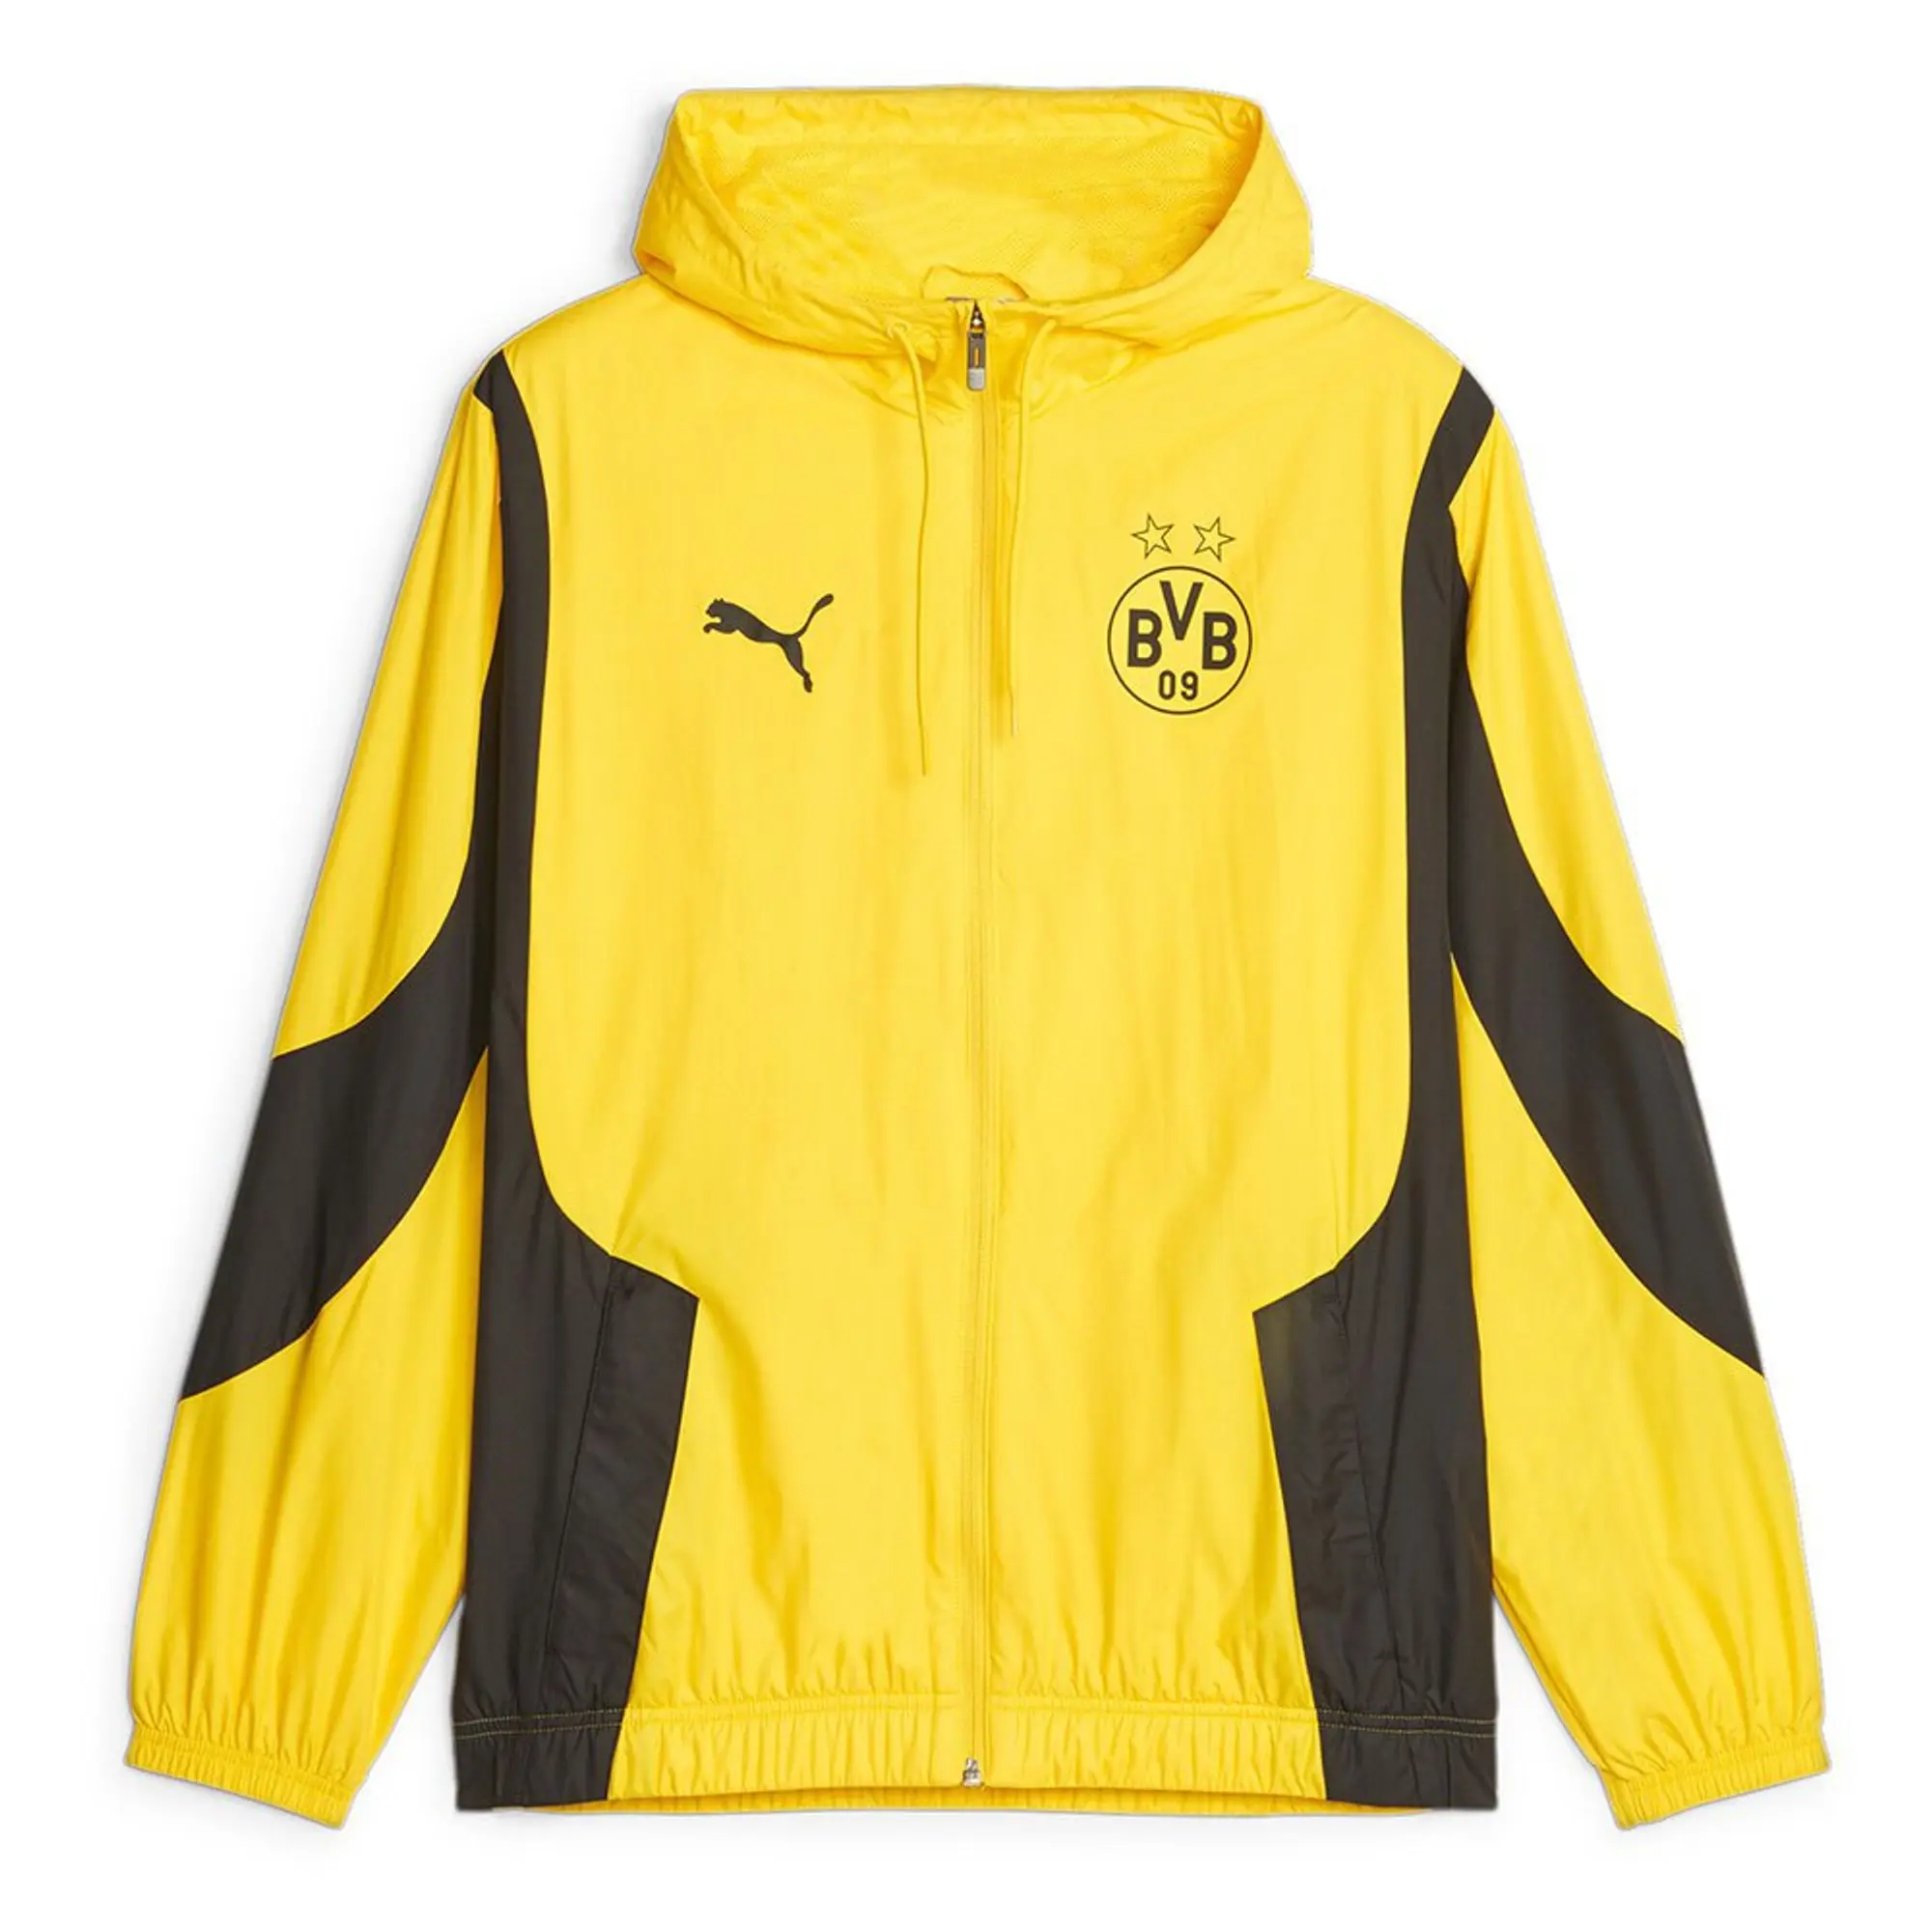 PUMA Borussia Dortmund Men's Prematch Football Jacket, Cyber Yellow/Black